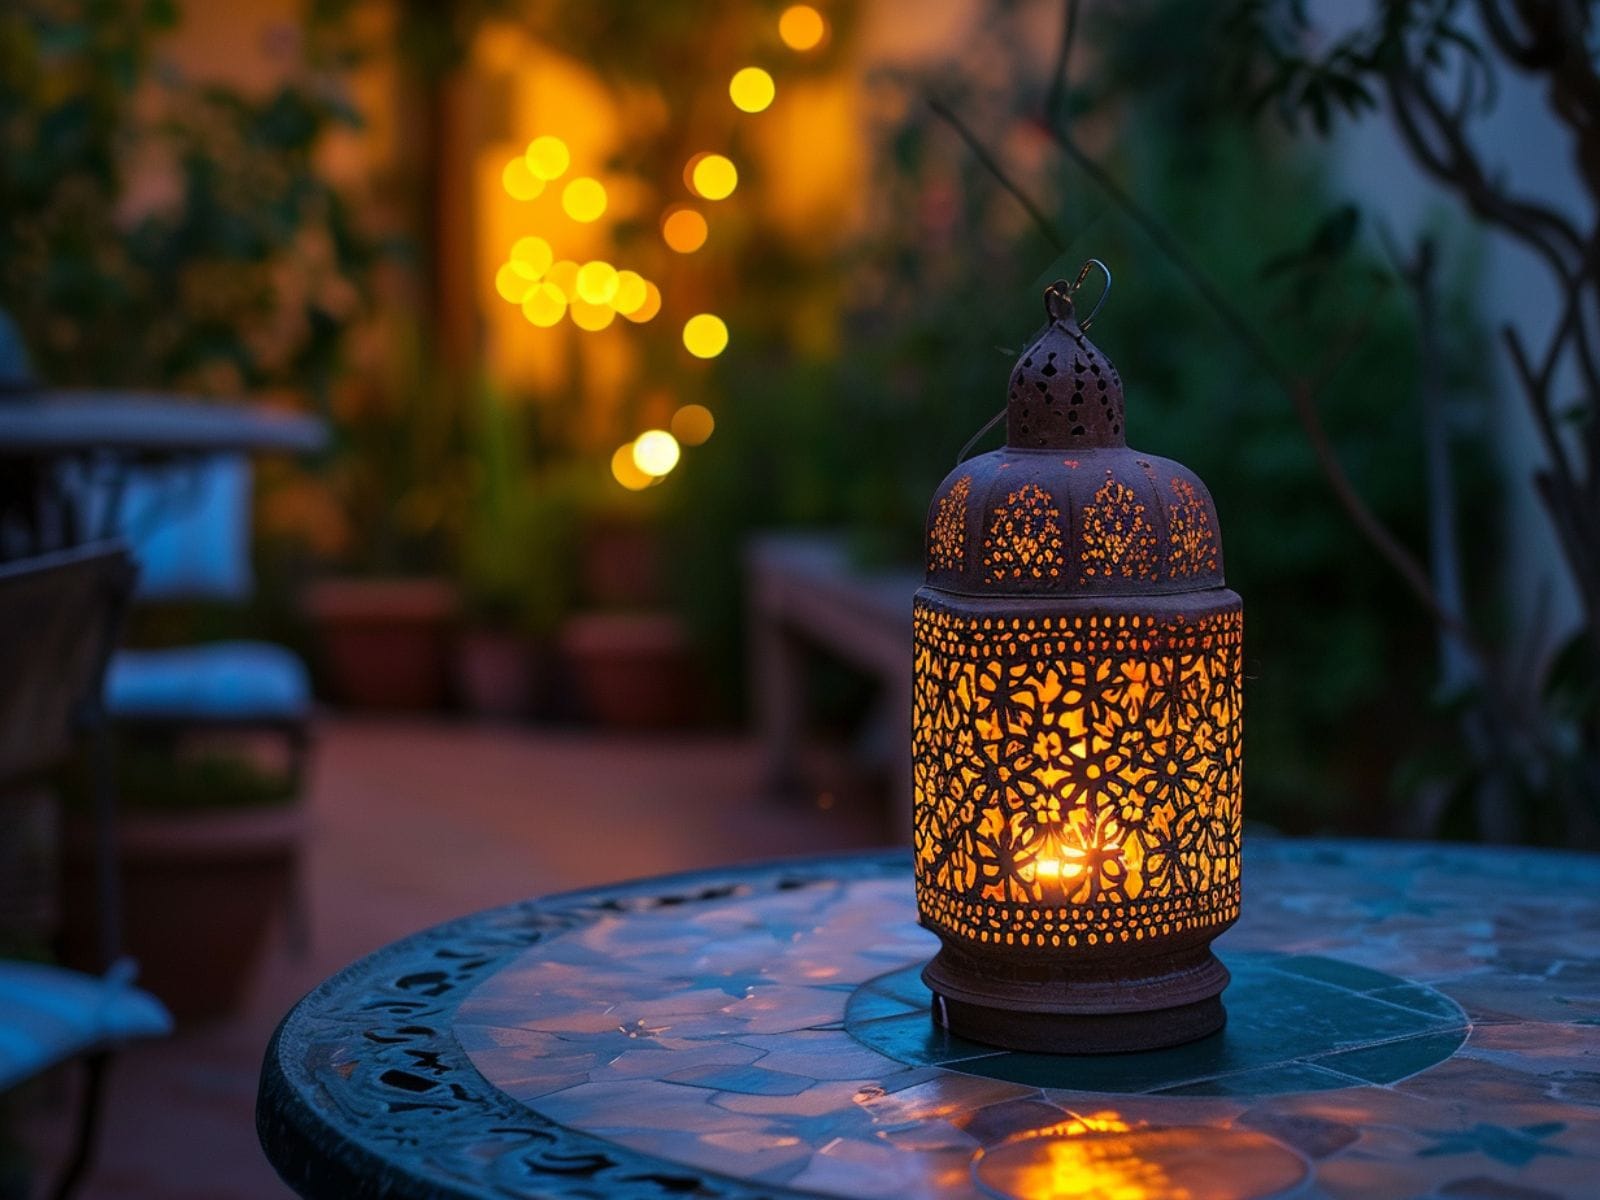 A table lantern illuminating an outdoor seating area